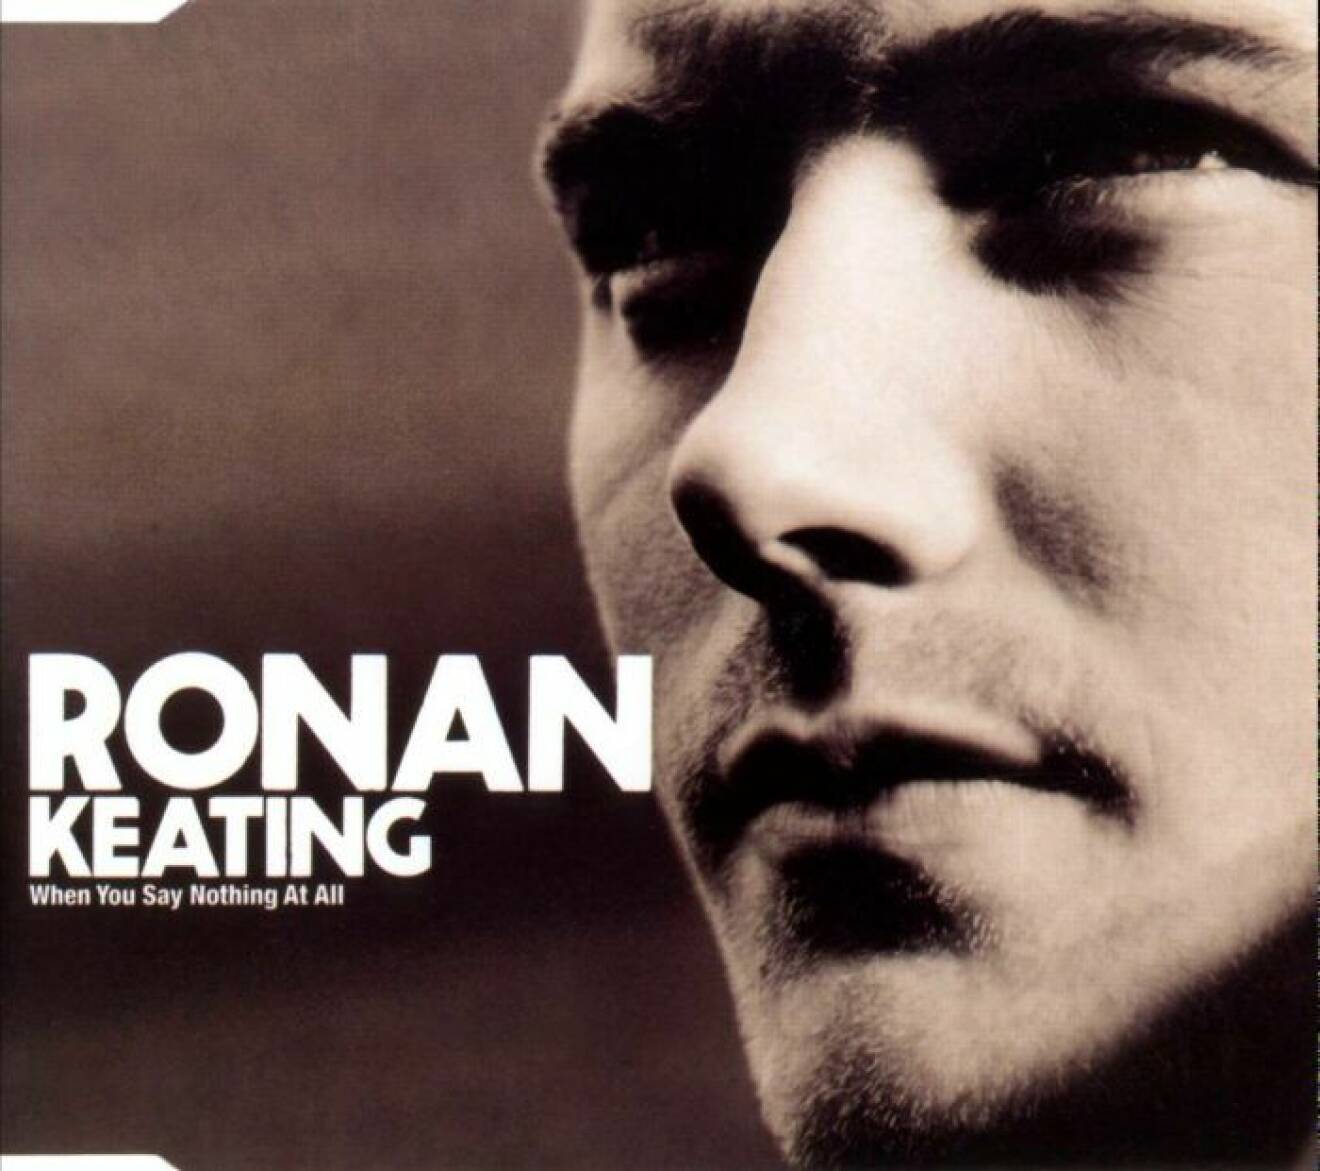 Singeln When You Say Nothing at All av Ronan Keating.